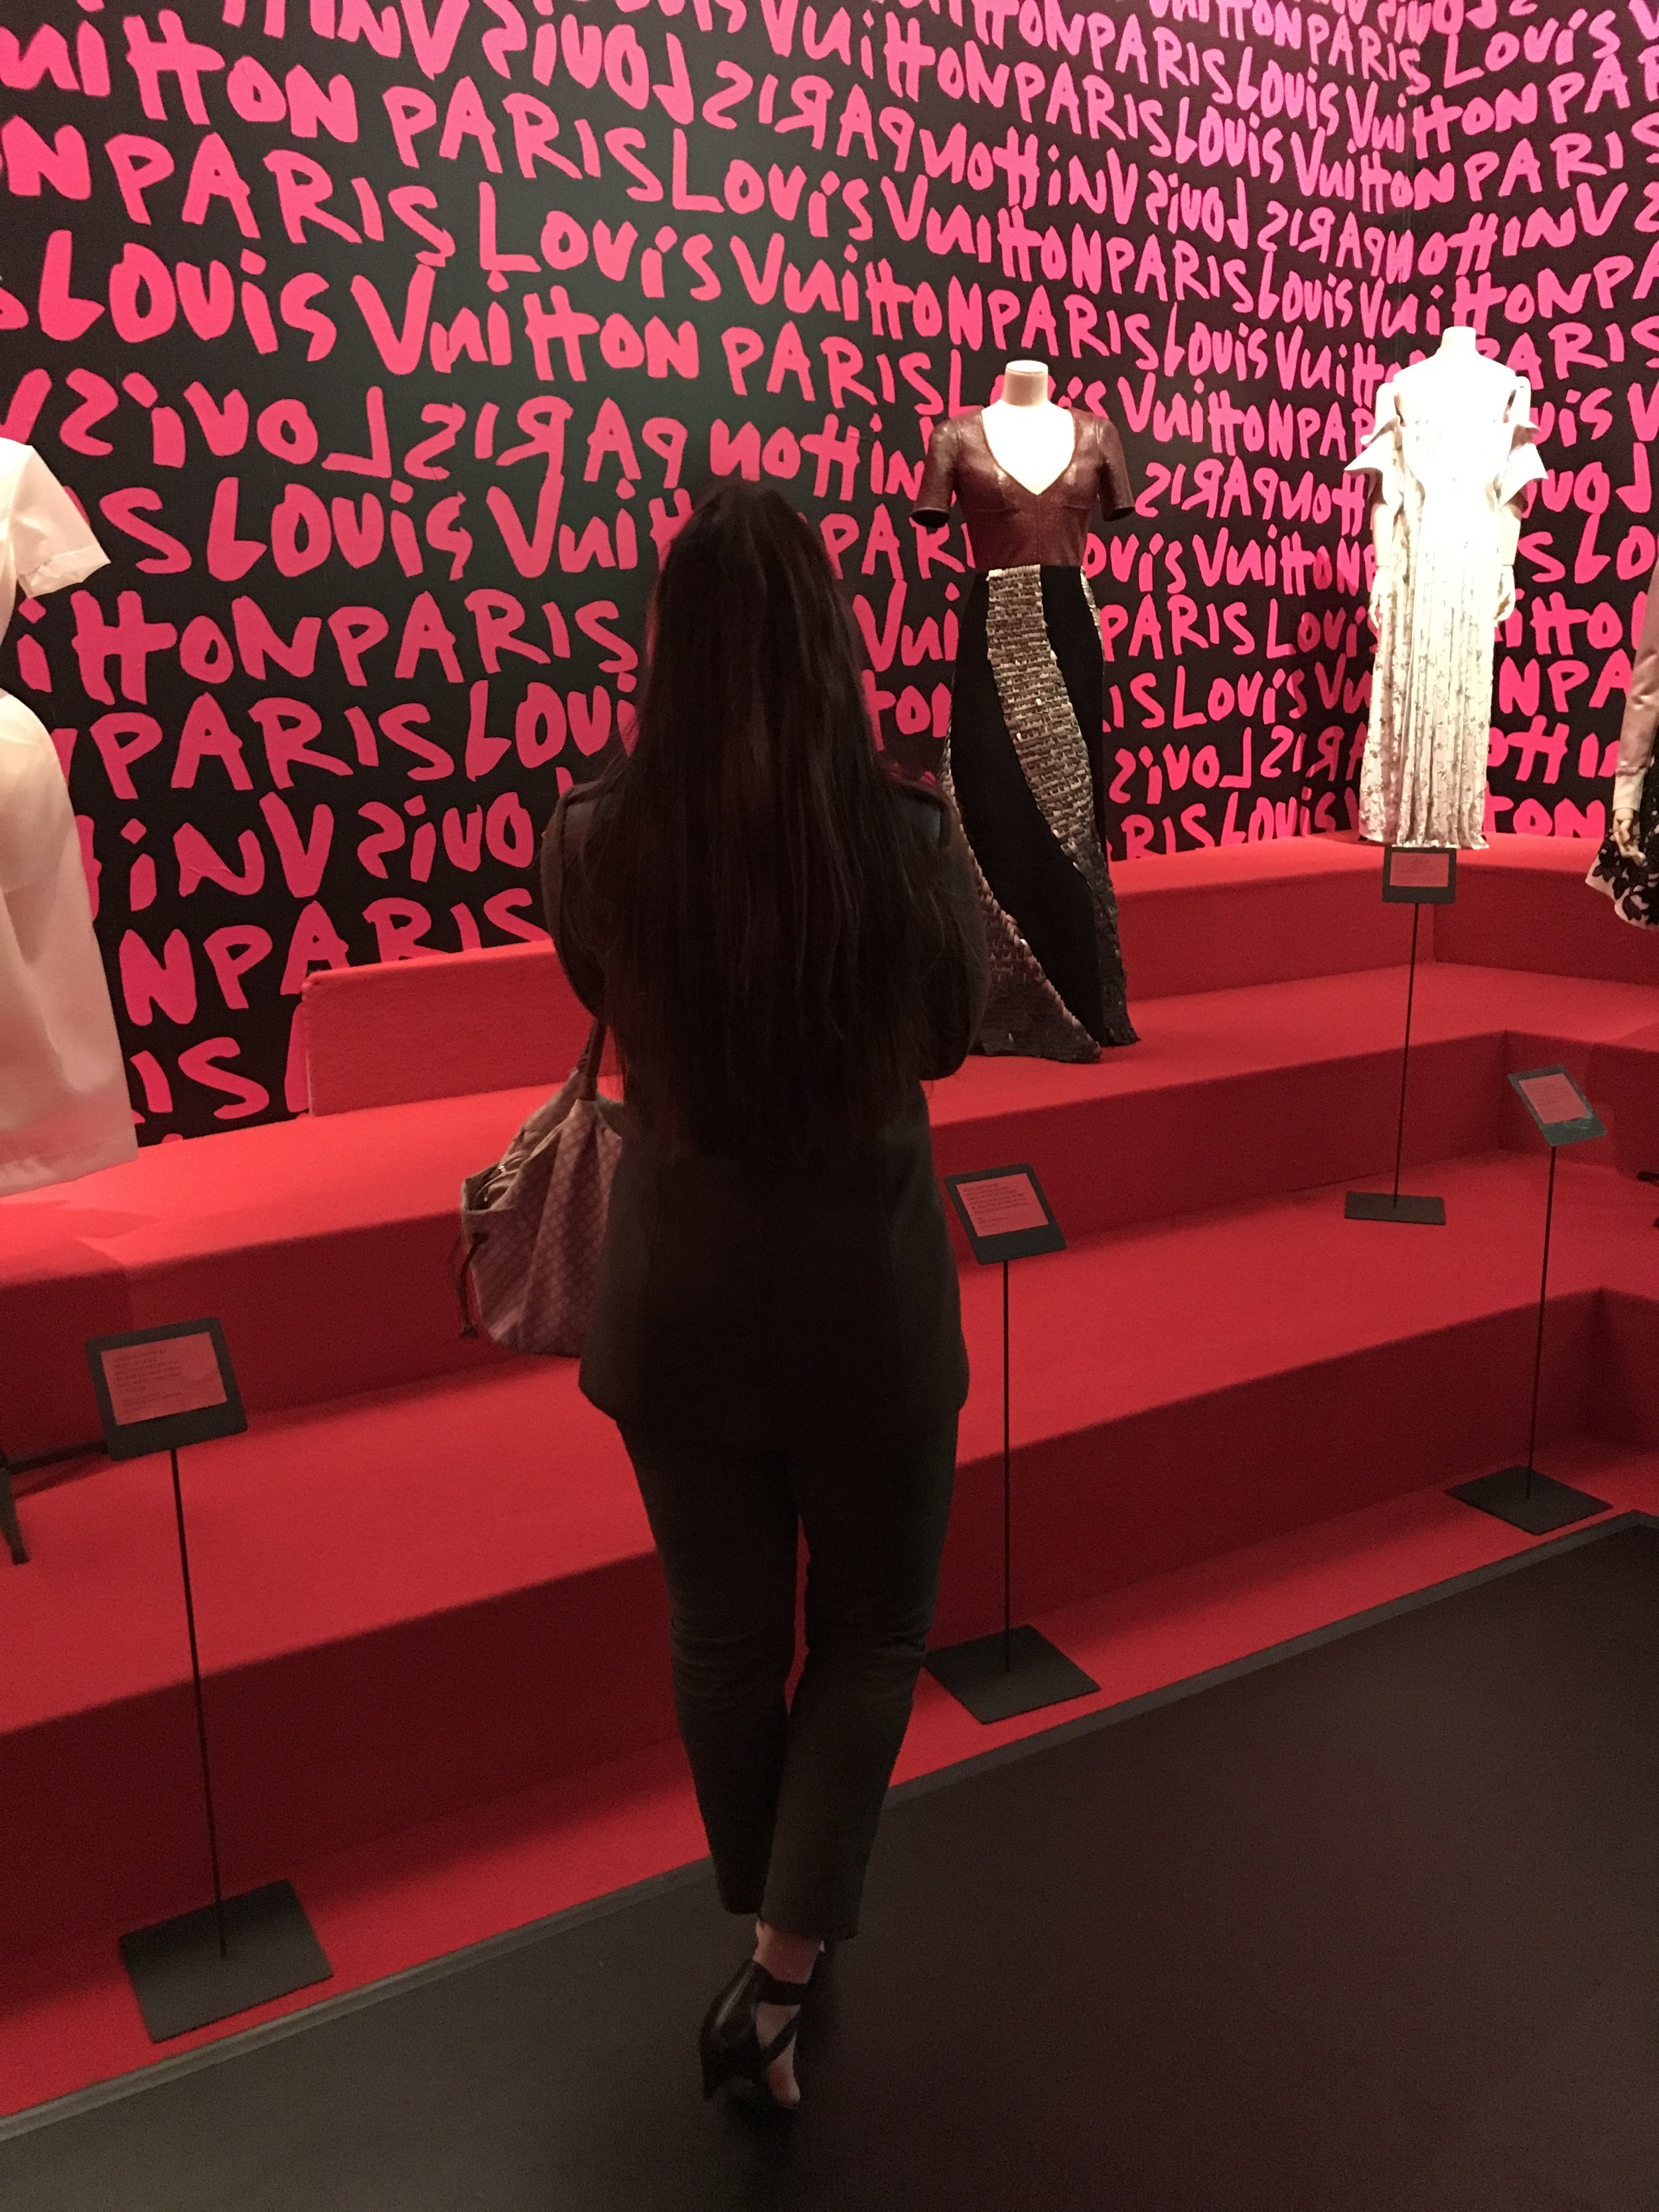 Volez Voguez Voyagez” is the new Louis Vuitton exhibition in